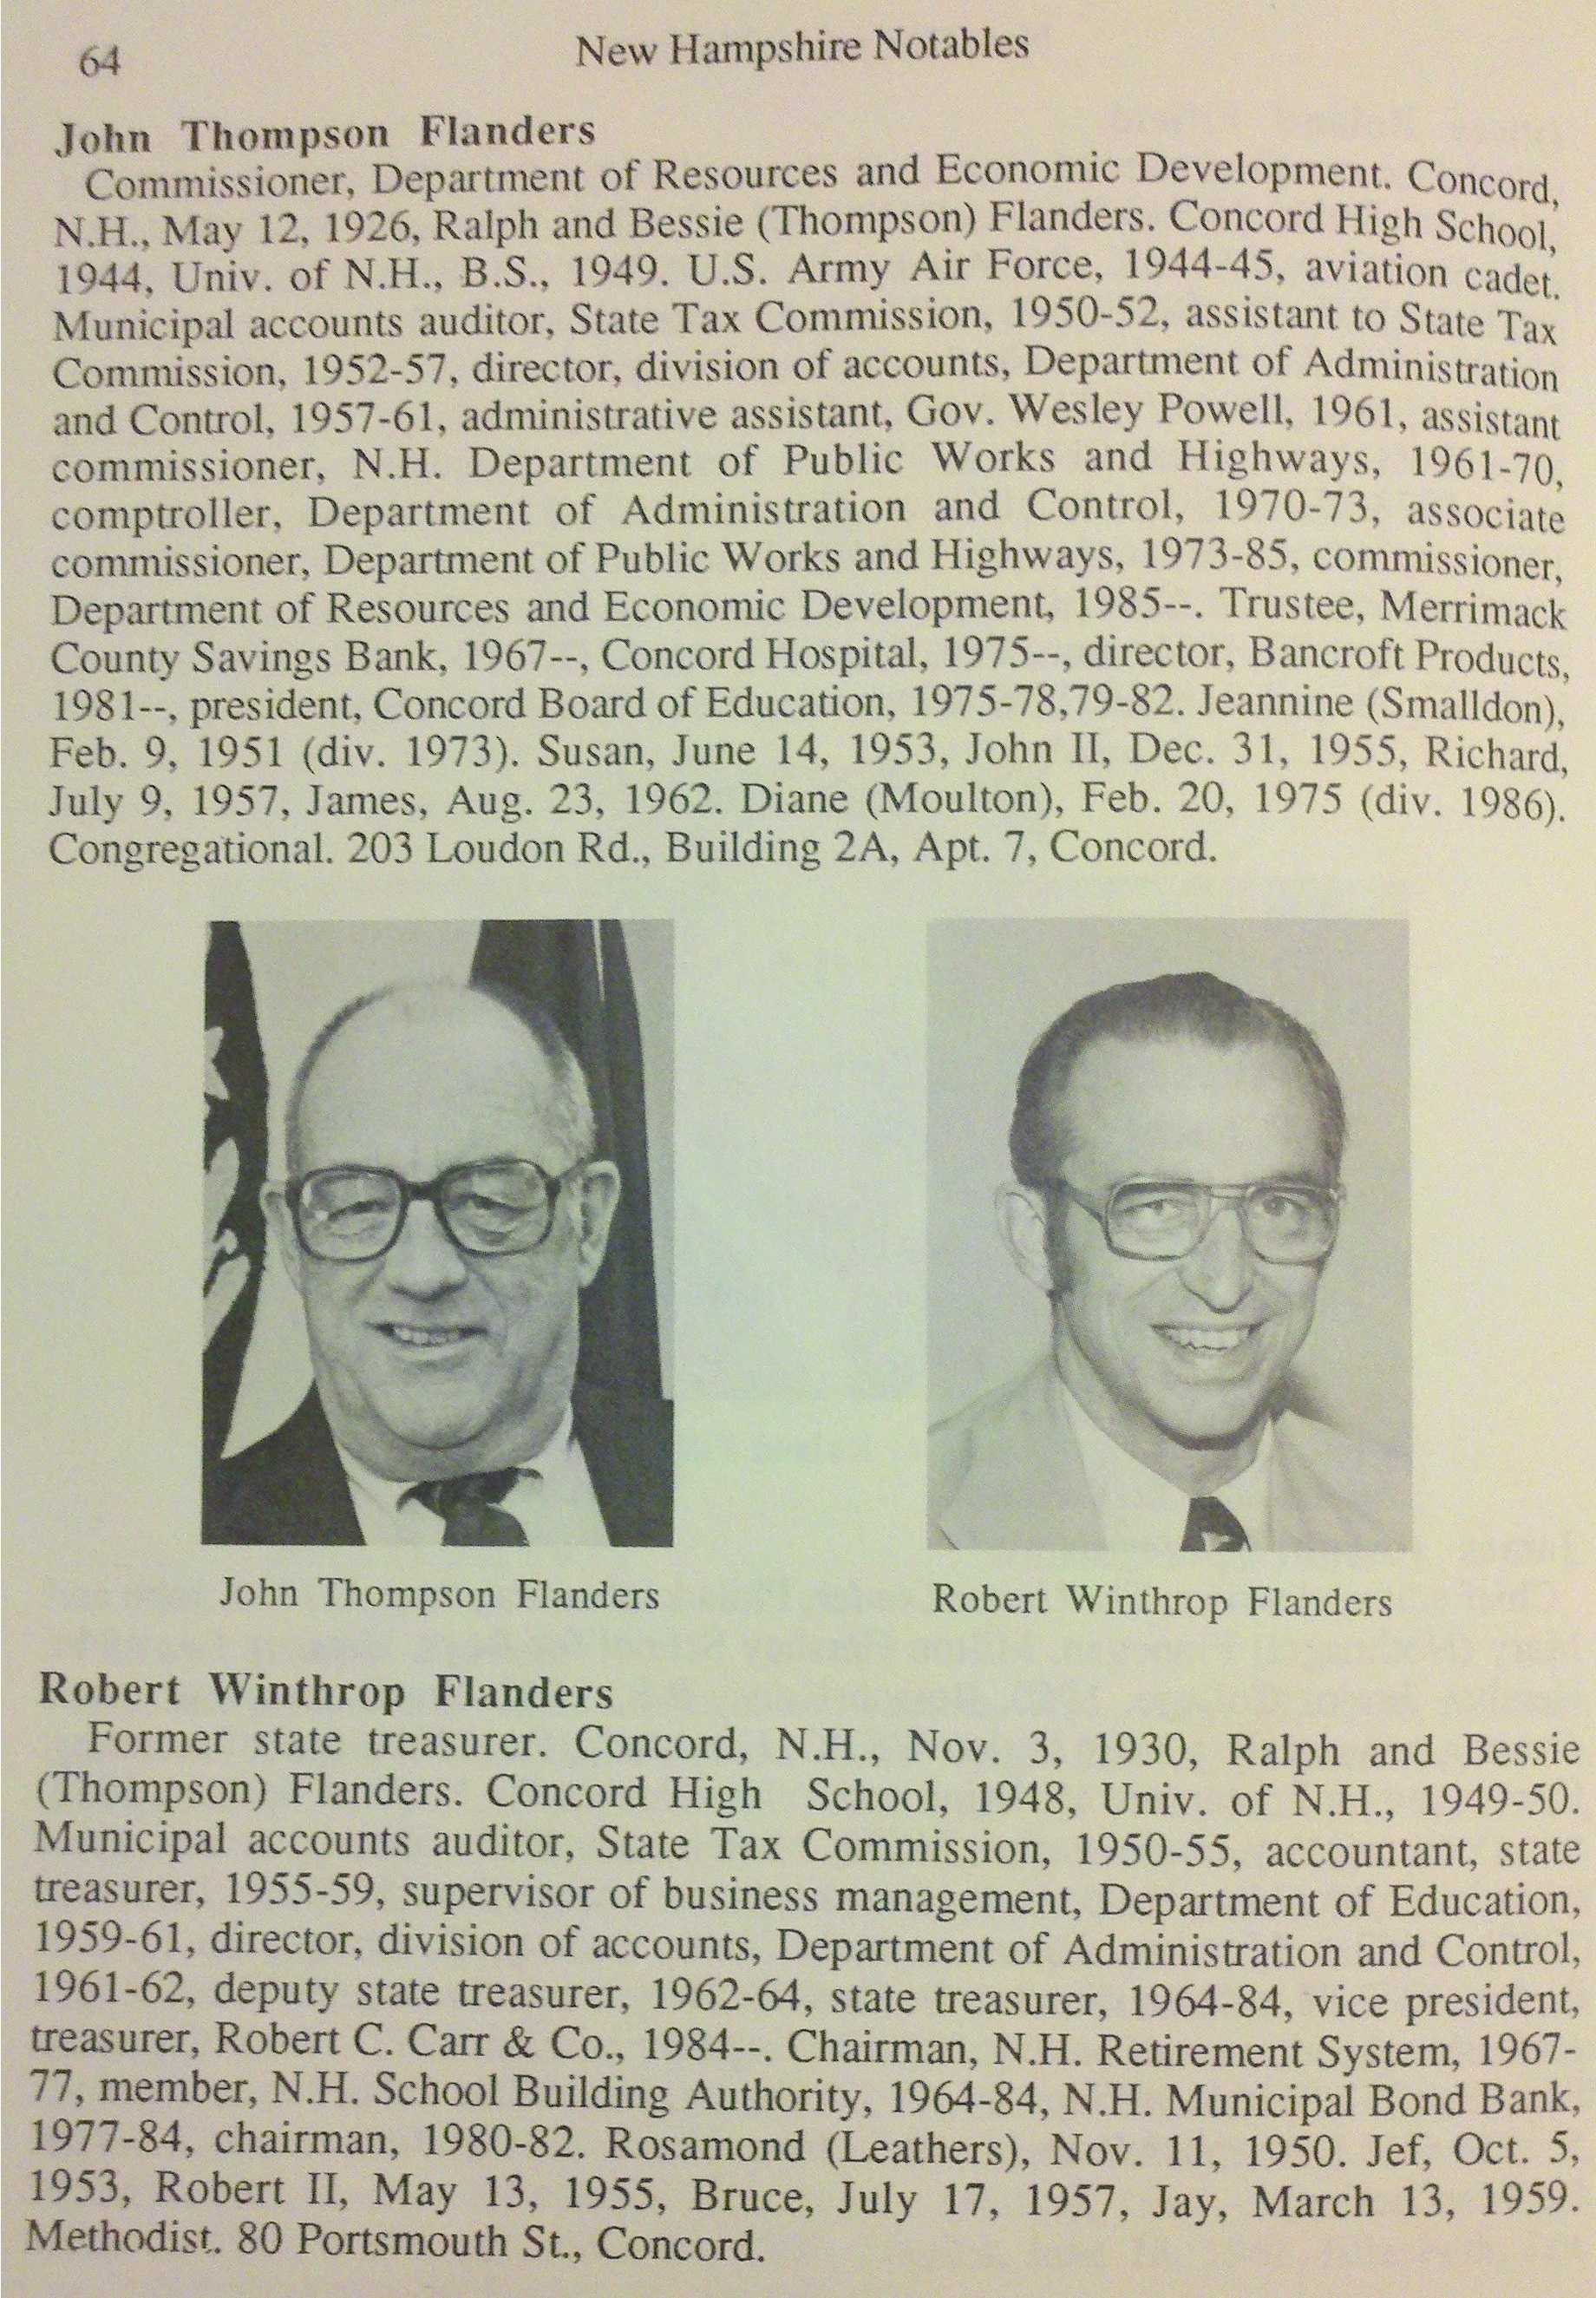 John T. & Robert W. Flanders, New Hampshire 1986